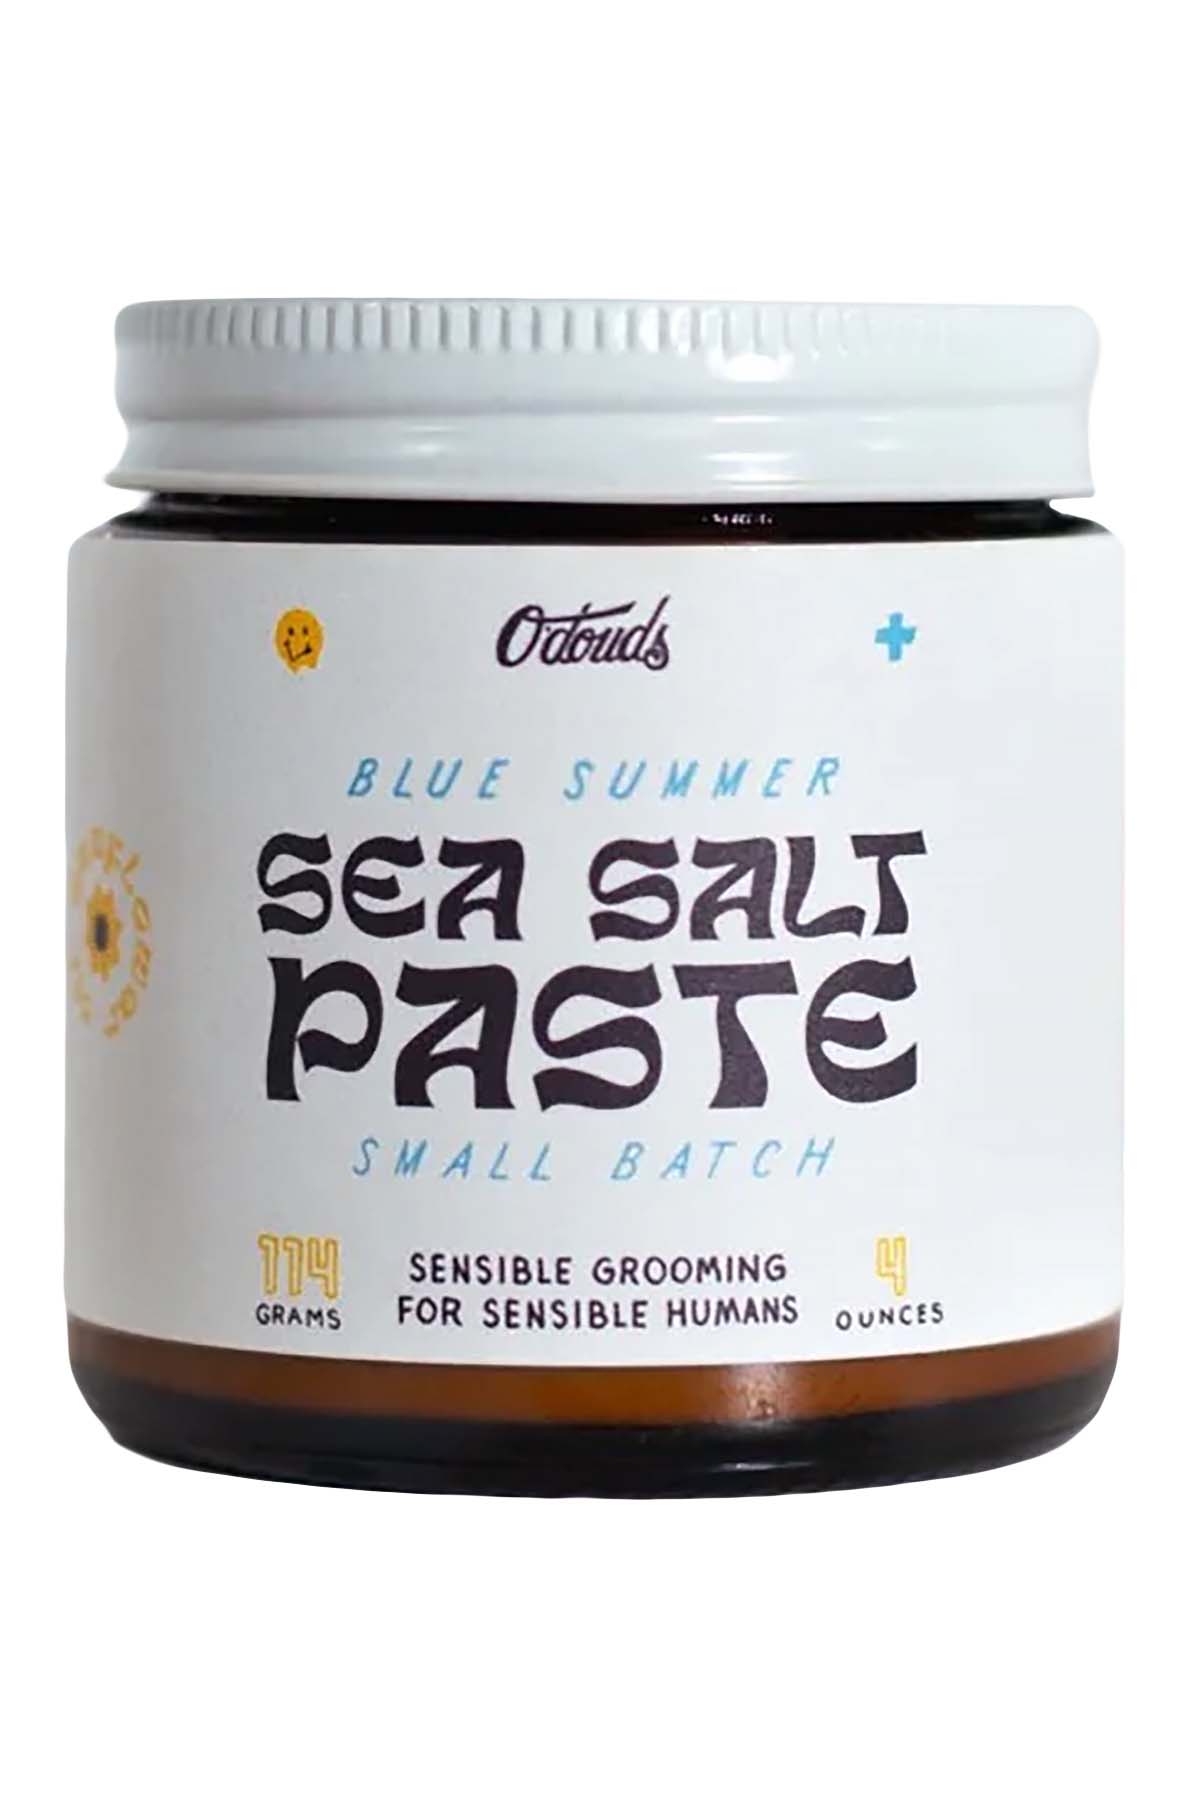 O'douds Blue Summer Sea Salt Paste 4 oz